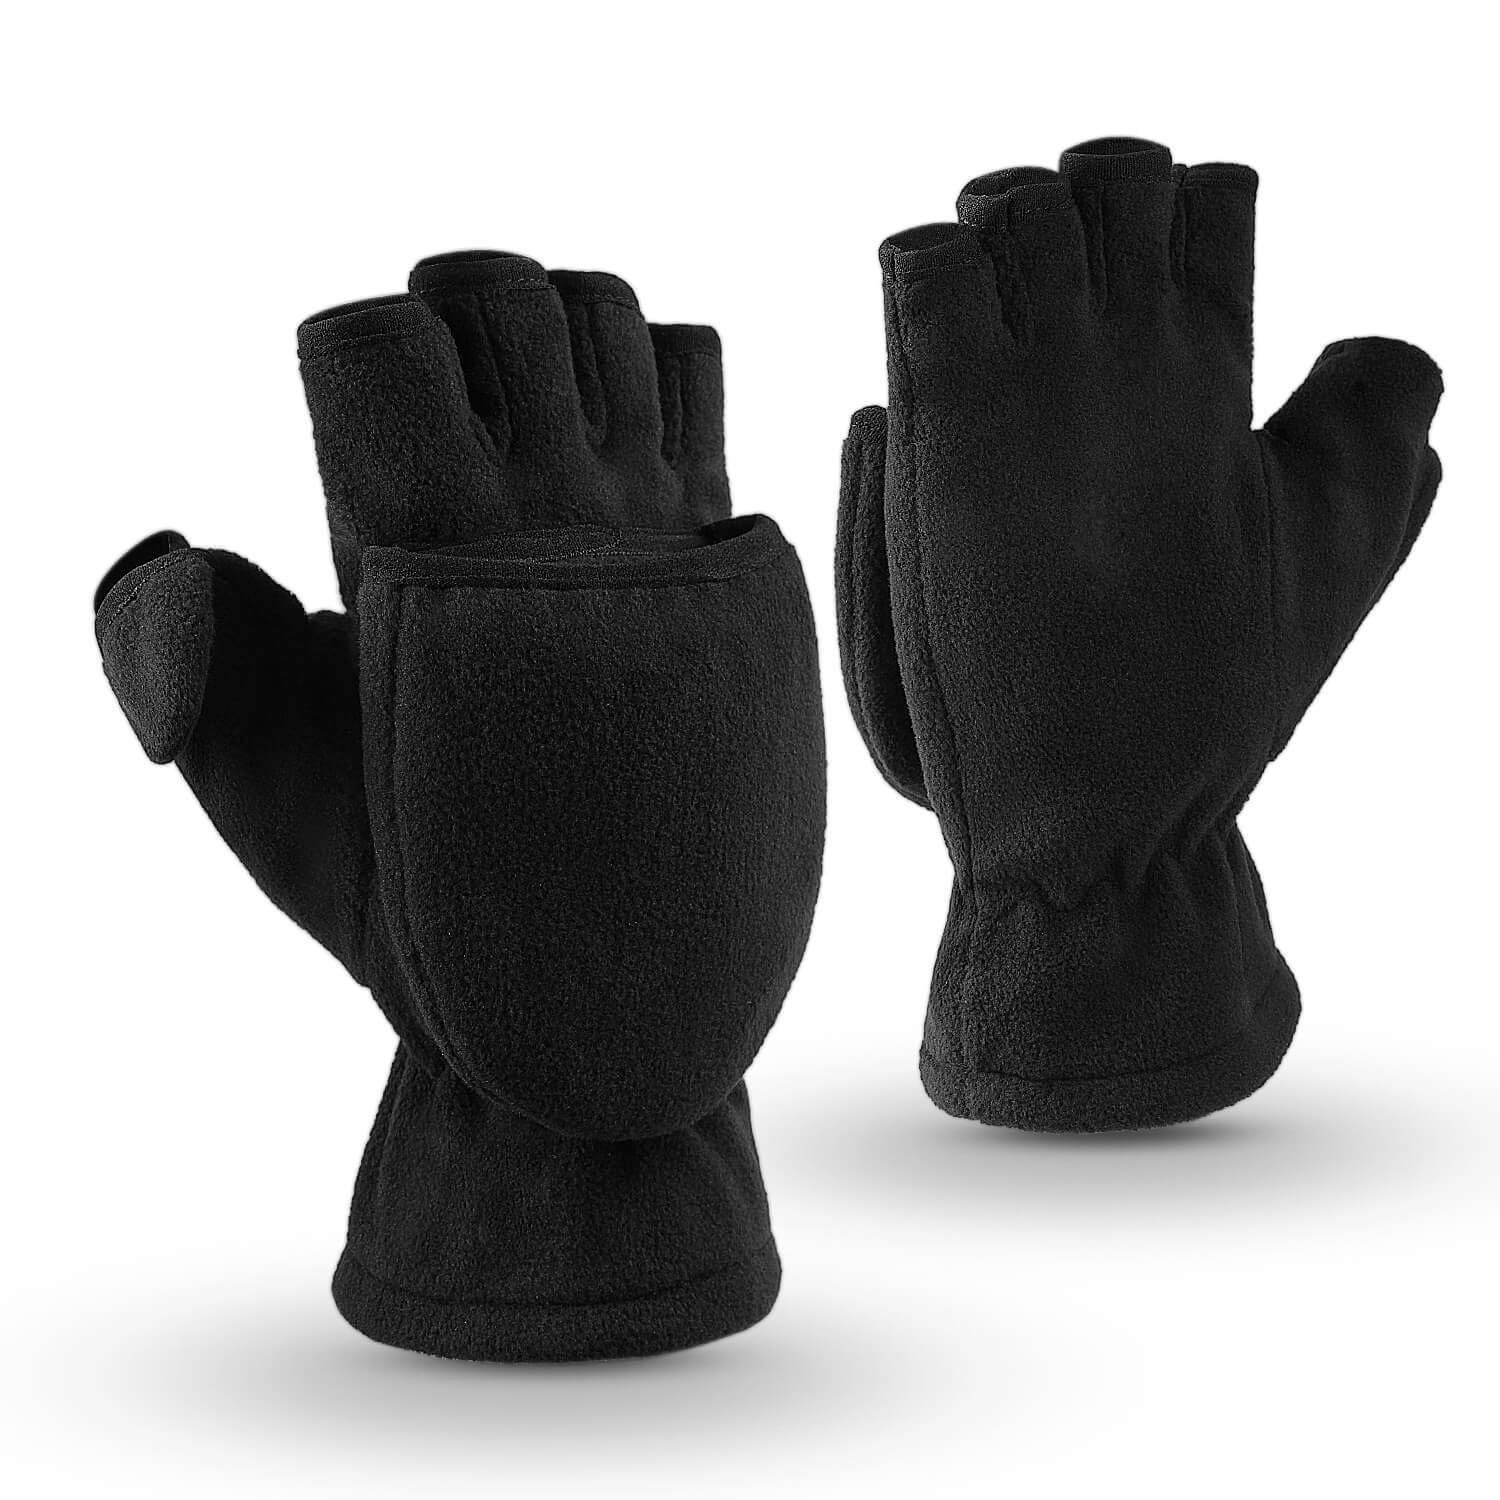 Jormftte Strickhandschuhe Winter Fingerlose Handschuhe,Warme Strickhandschuhe Arbeiten Camping